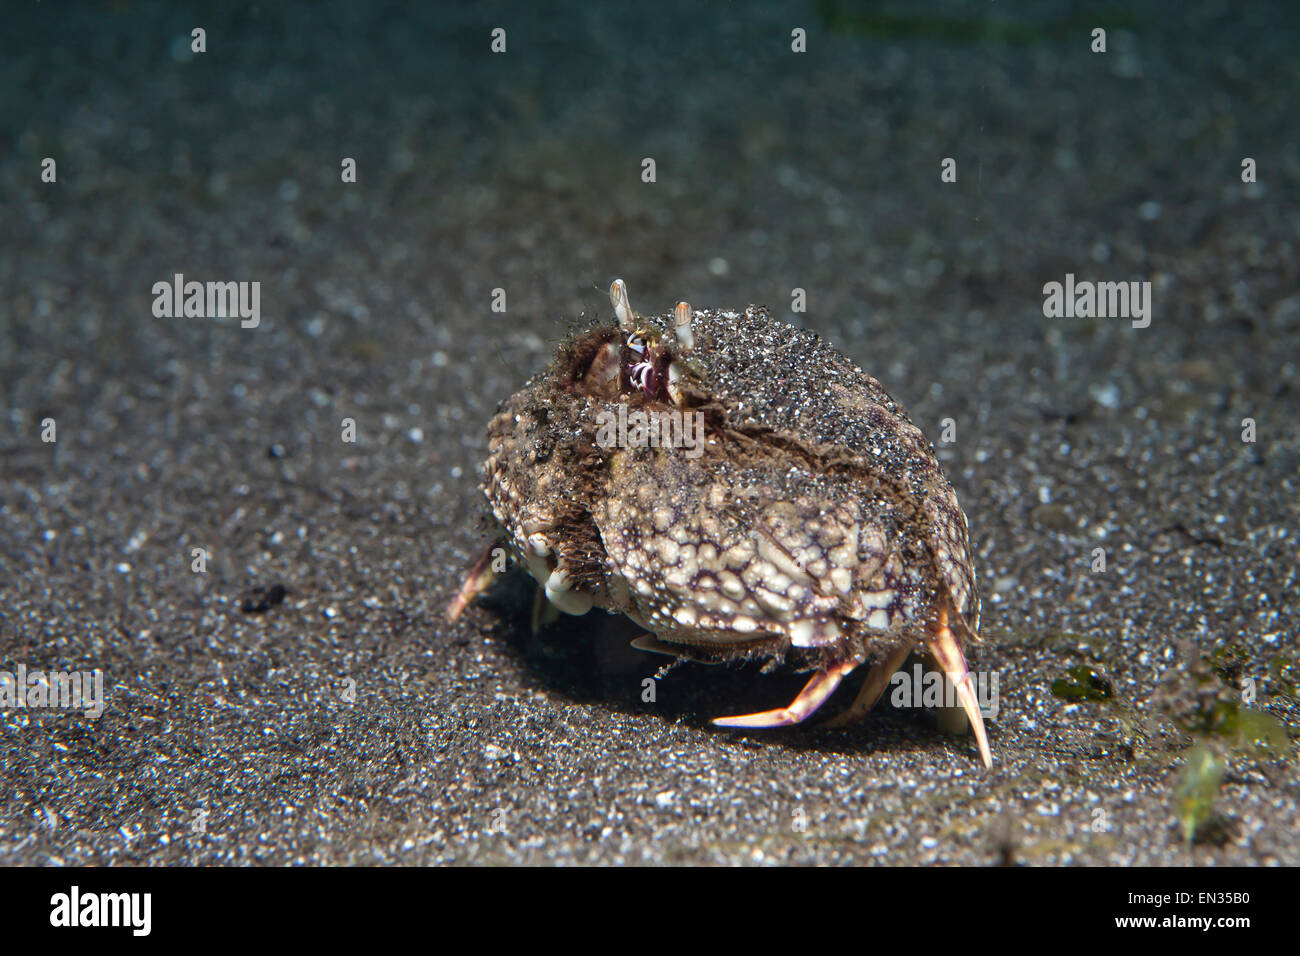 Smooth box crab (Calappa hepatica), Secret Bay, Bali, Indonesia Stock Photo